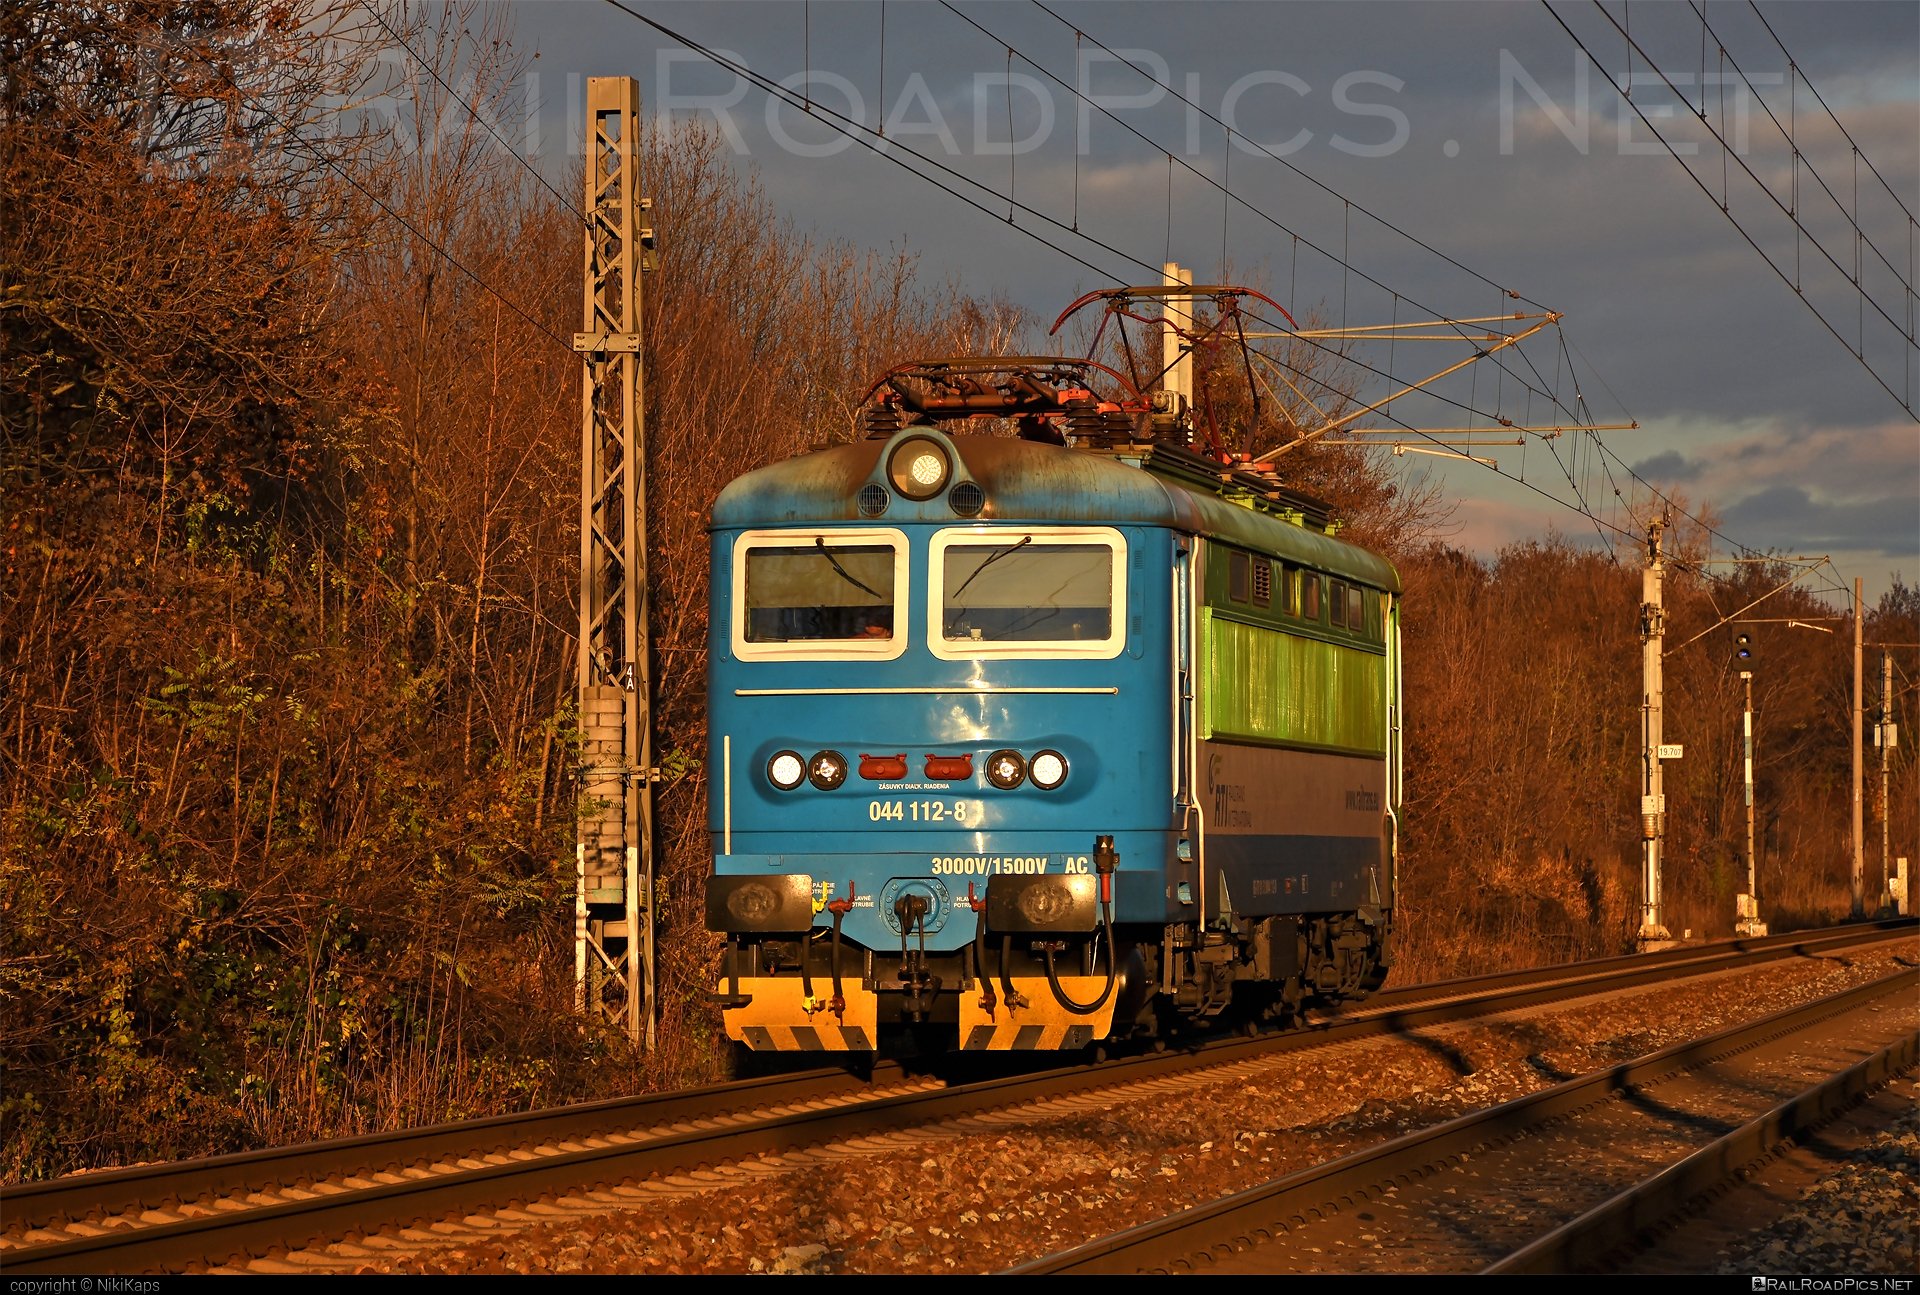 Škoda 73E - 044 112-8 operated by Railtrans International, s.r.o #RailtransInternational #locomotive242 #plechac #rti #skoda #skoda73e